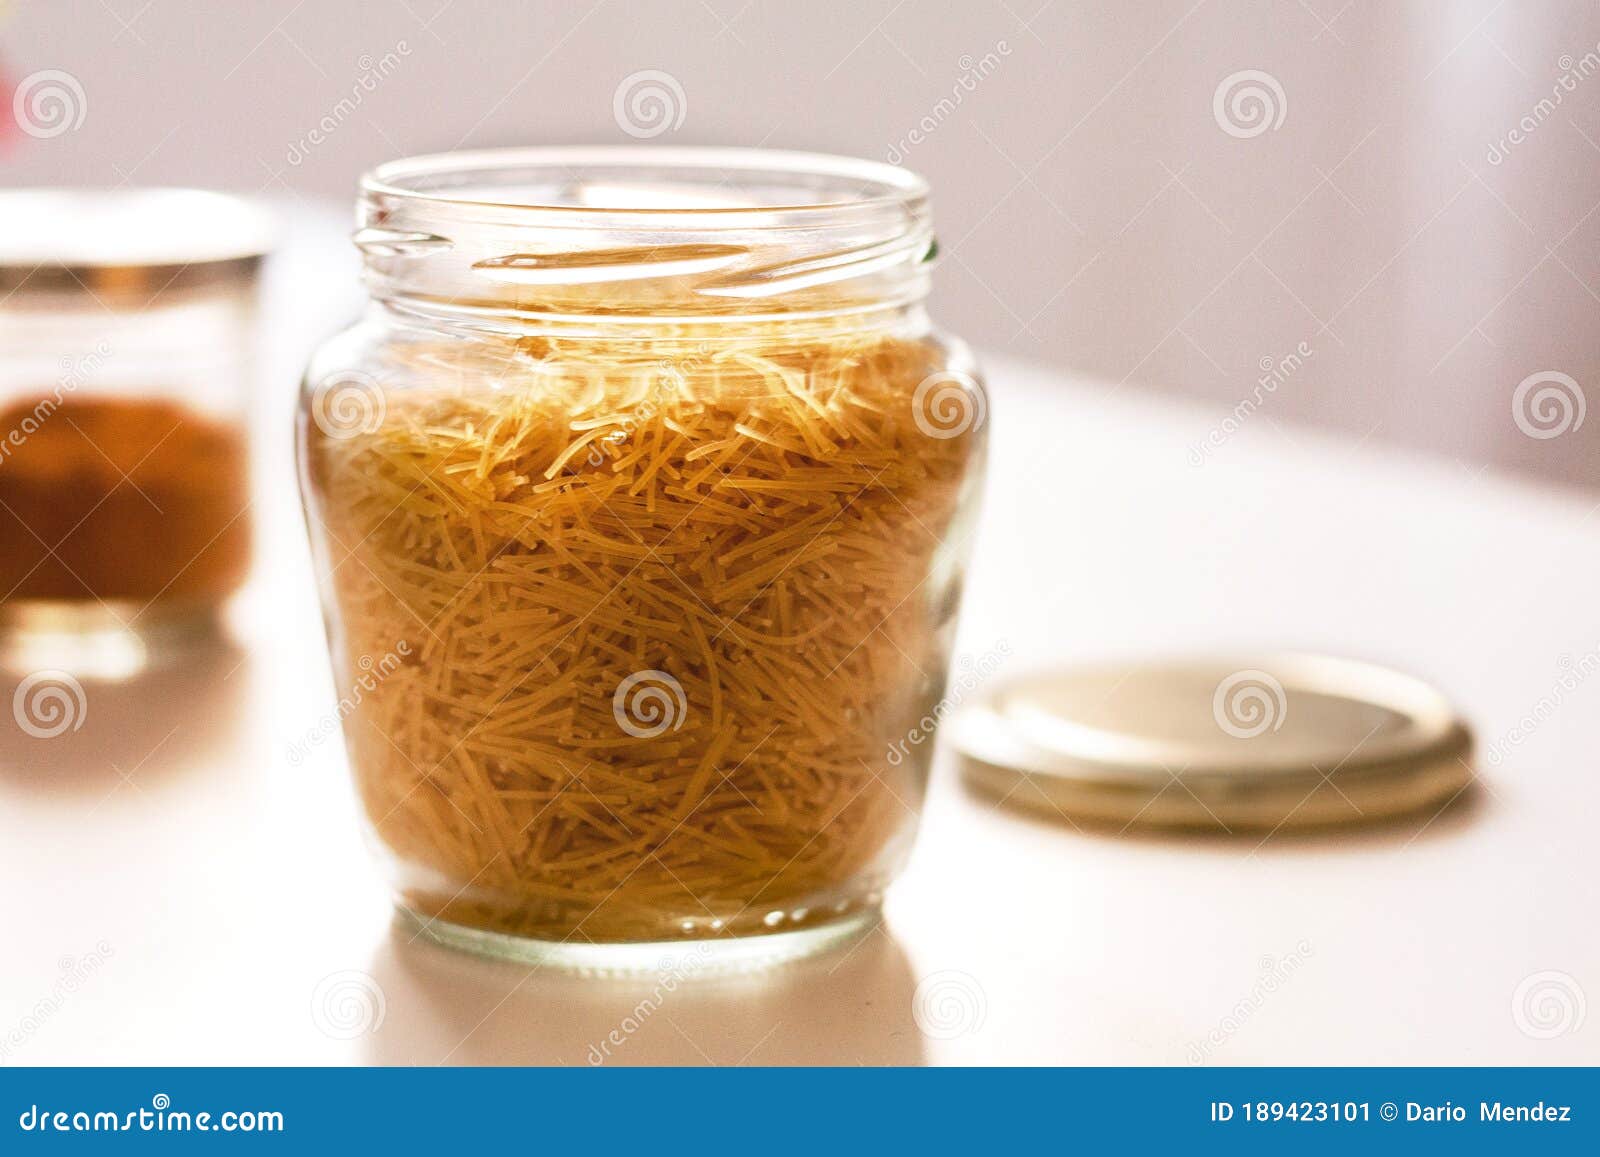 short noodles storage jar zero waste, noodle jar, cristal recycling still life